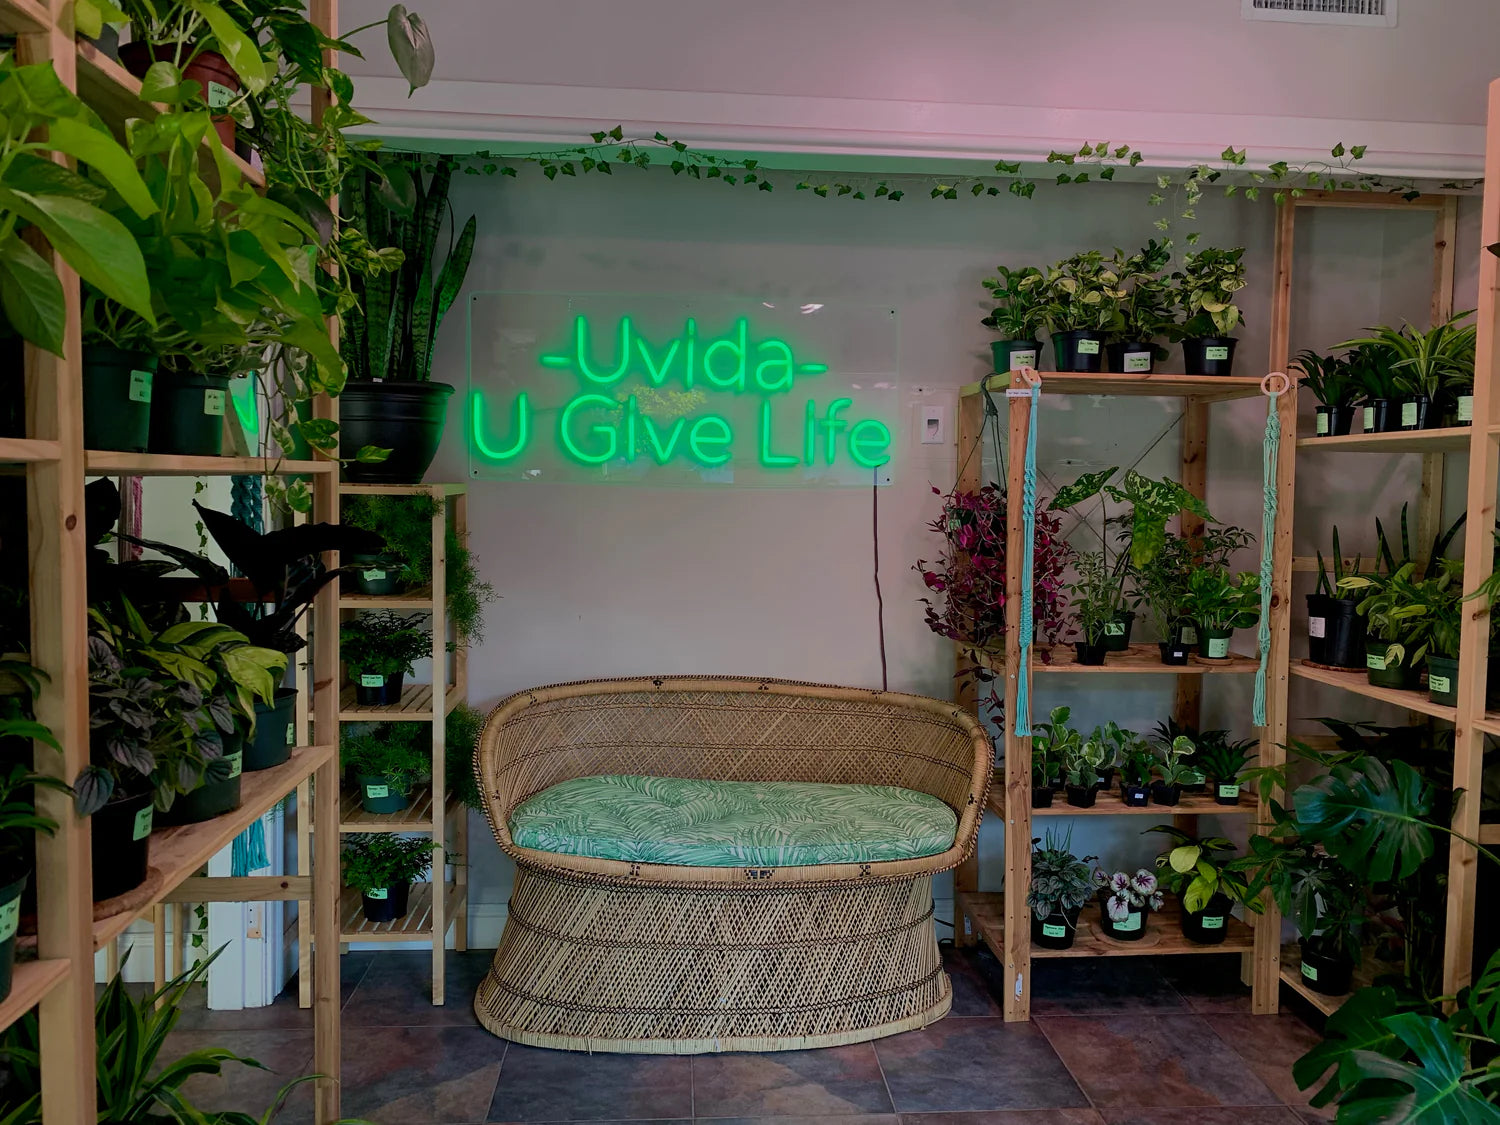 Swedish Dishcloth – Uvida Shop: Boston's first Zero Waste Store